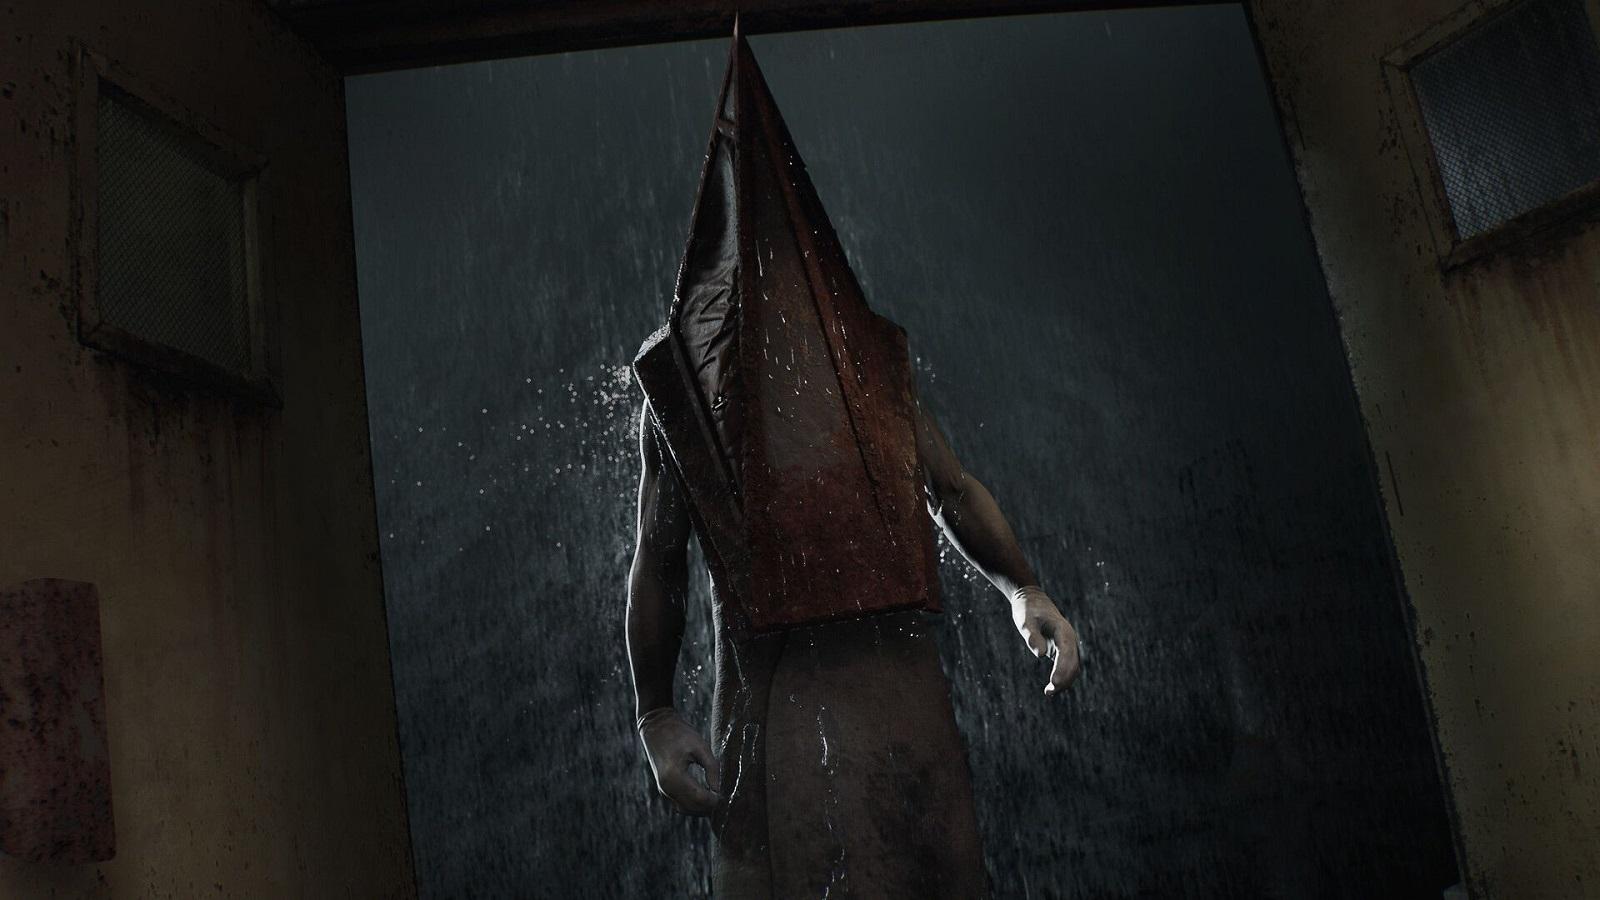 Silent Hill Ascension: Release date, trailers & more - Dexerto